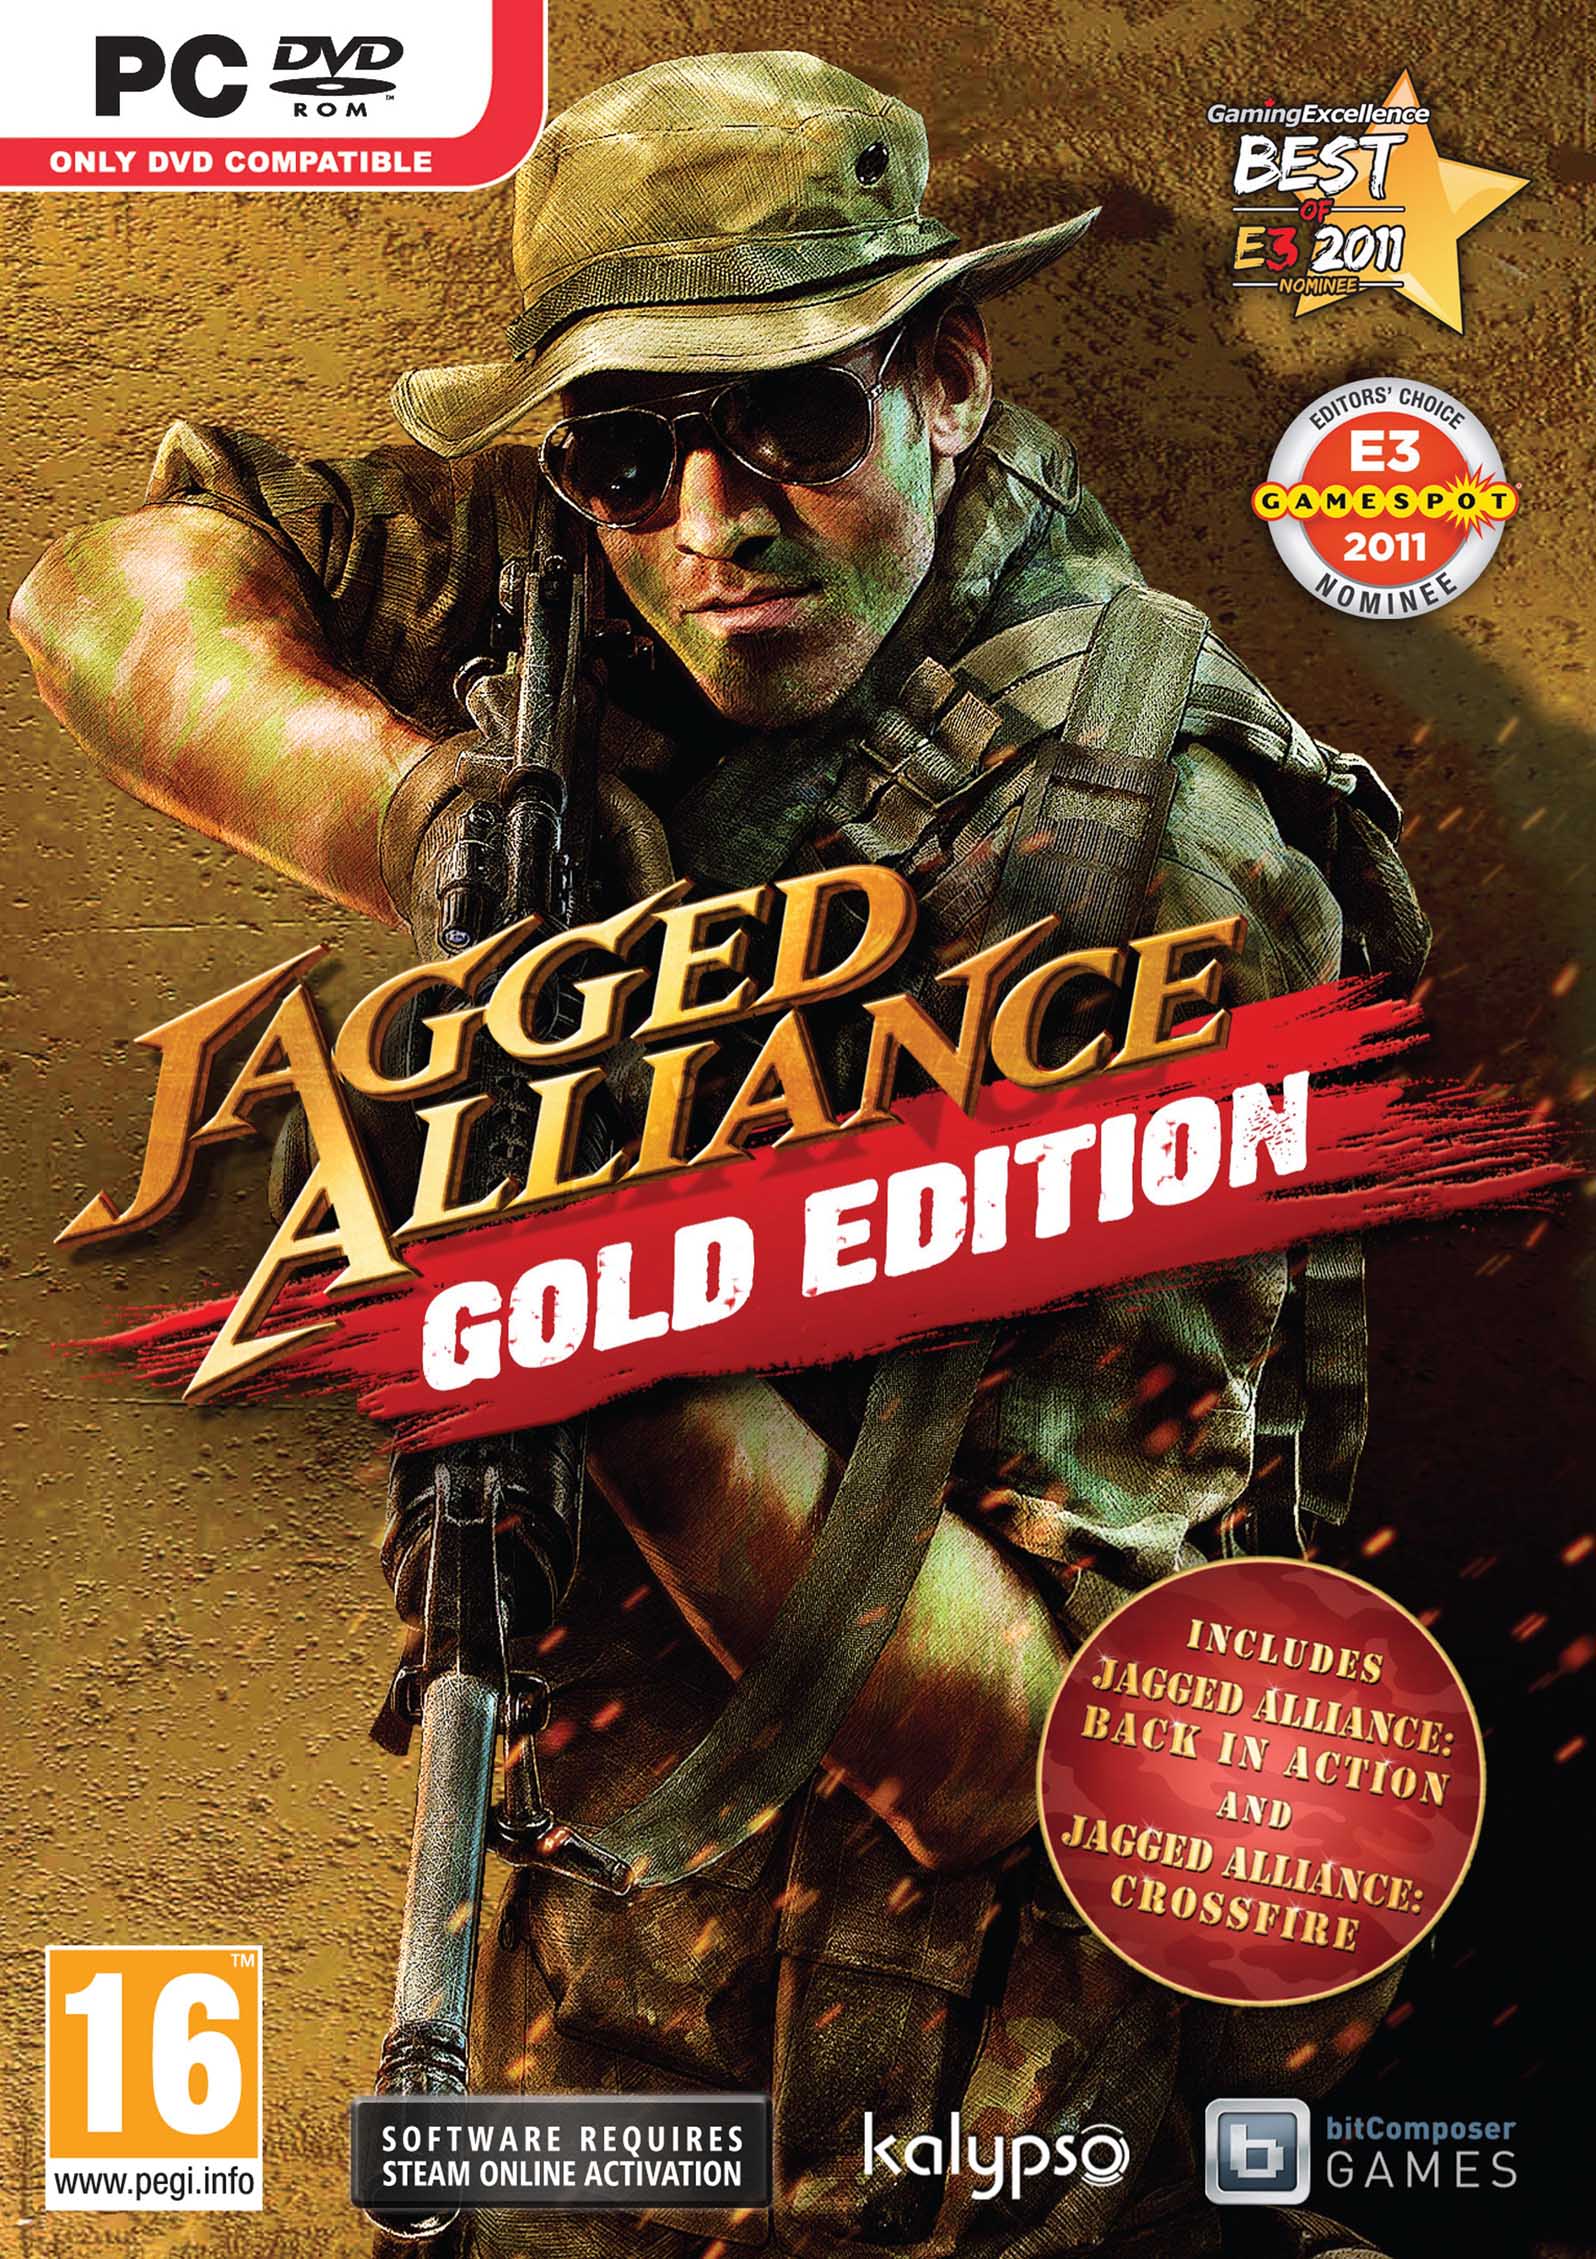 jagged alliance 2 vs jagged alliance 2 gold